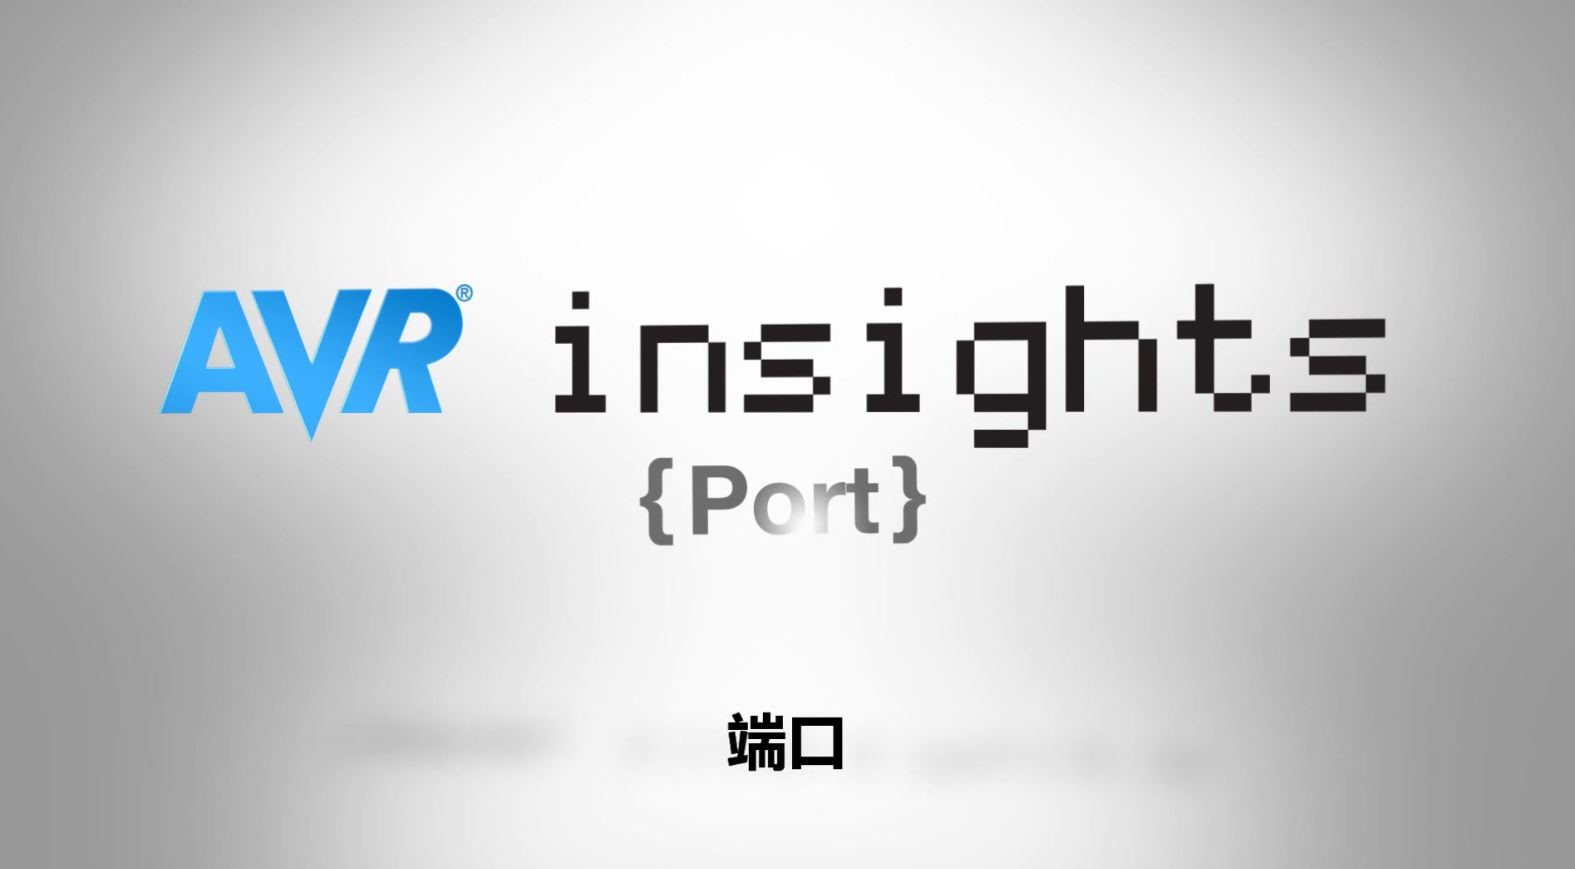 AVR® Insights — 第3集 — 端口